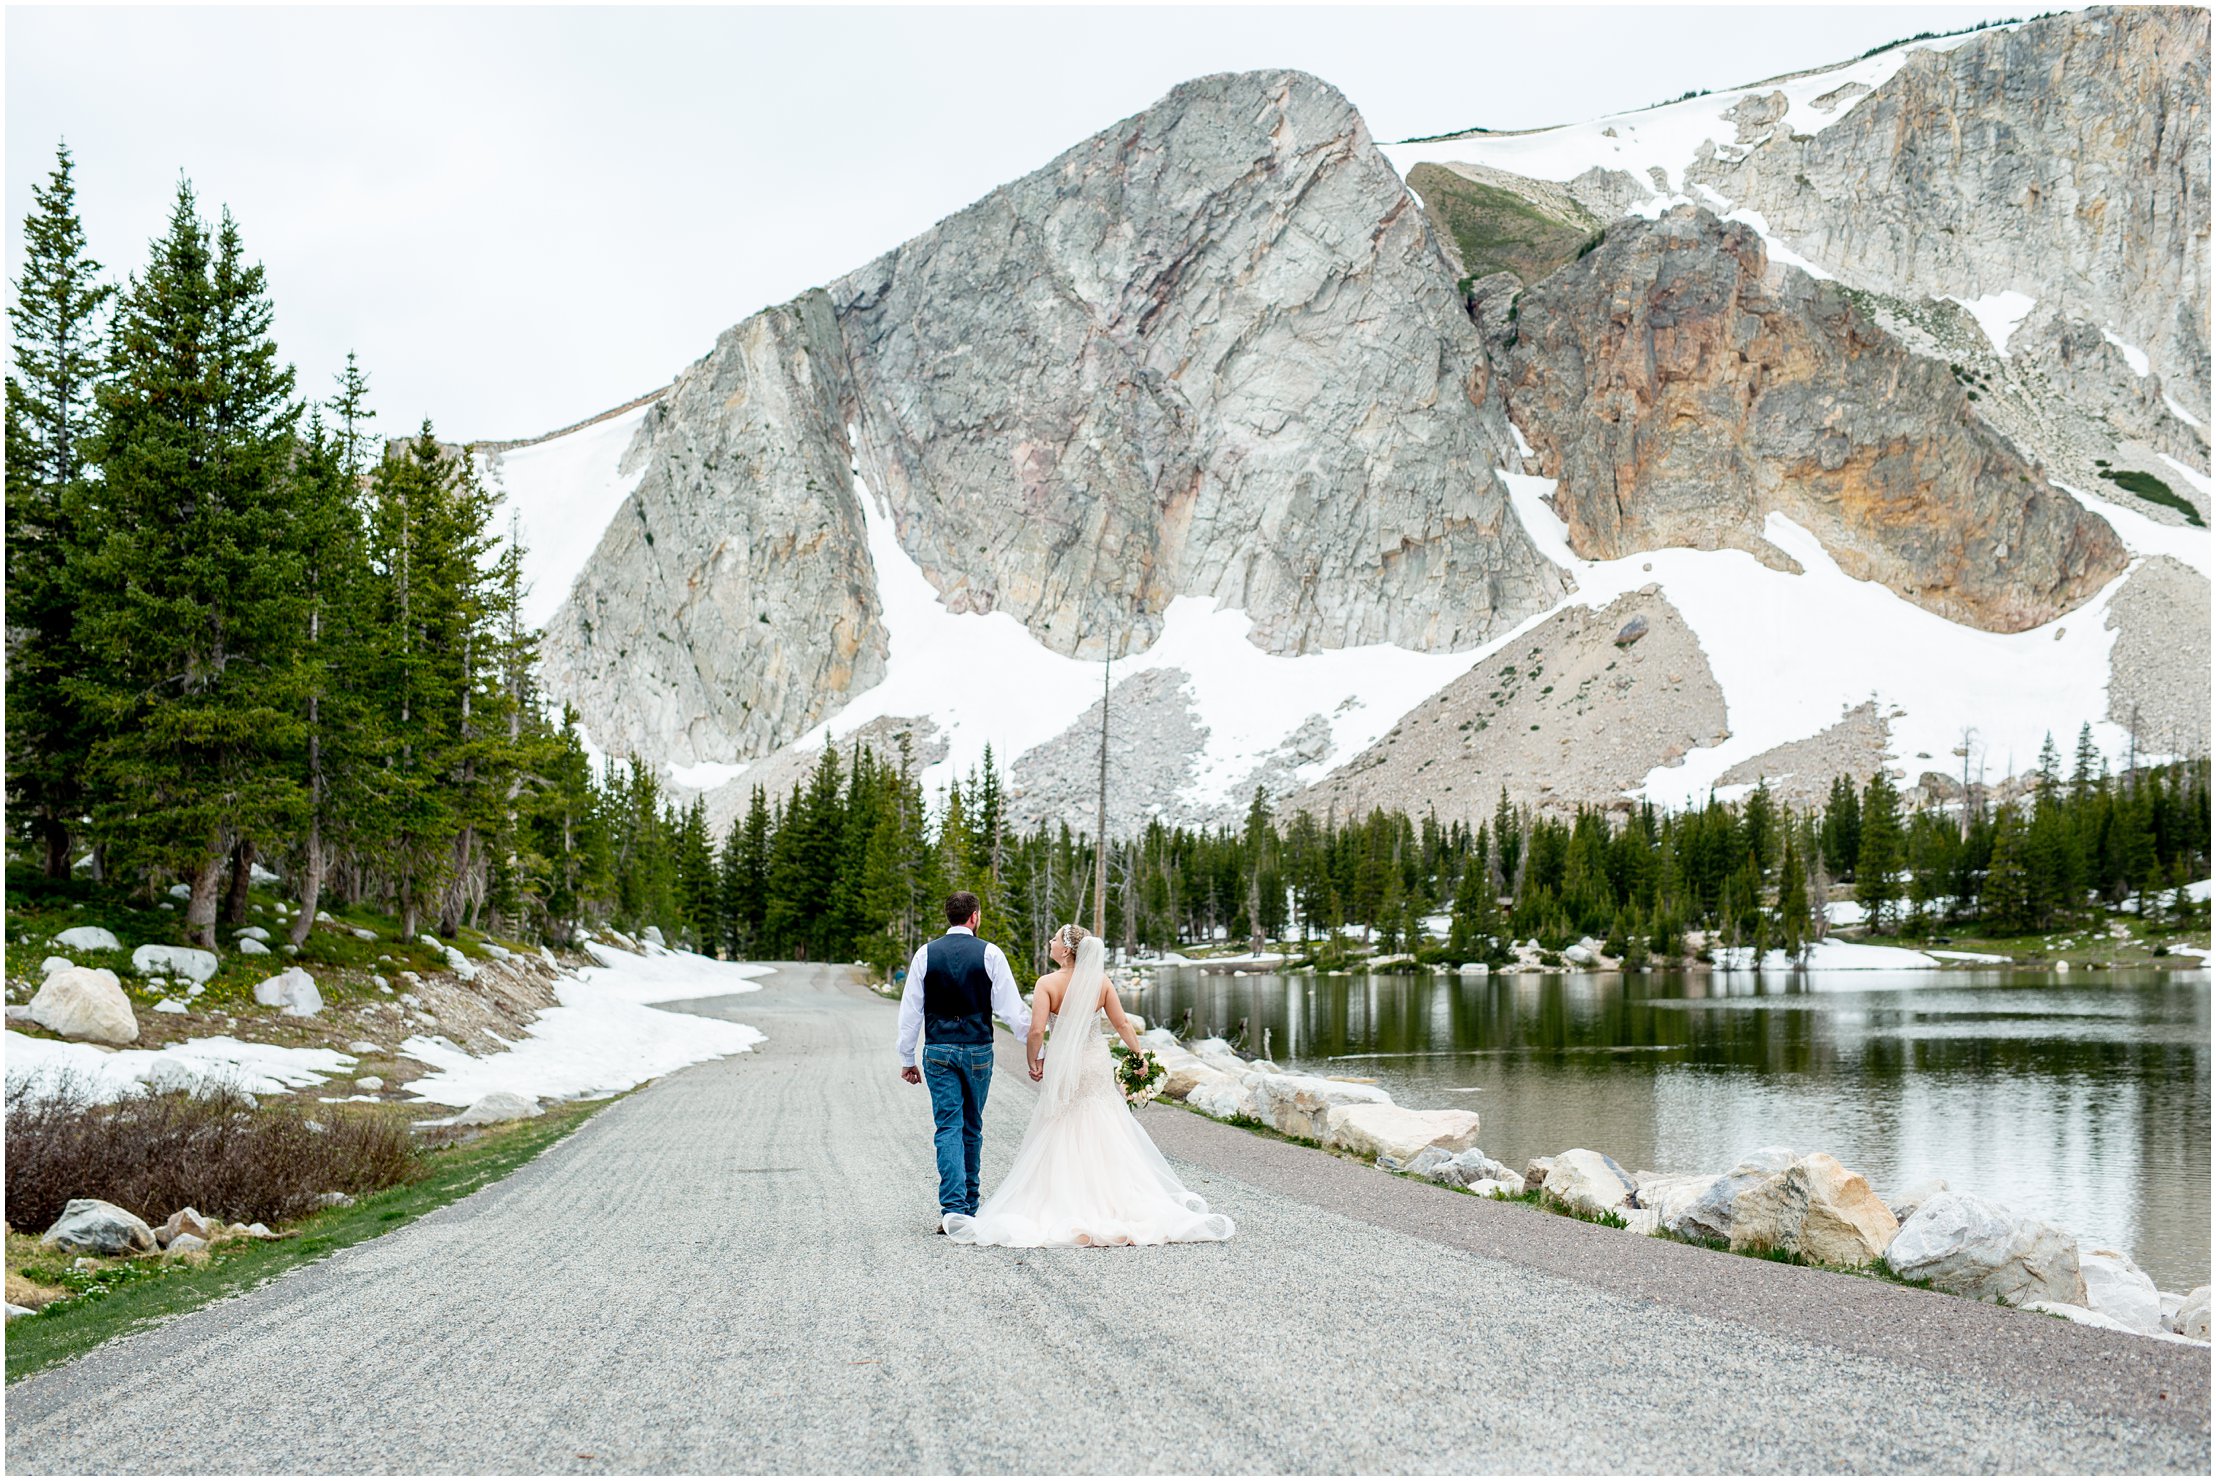 Brooklyn Lodge Wedding in the snowy mountains near centennial wyoming by wyoming wedding photographer